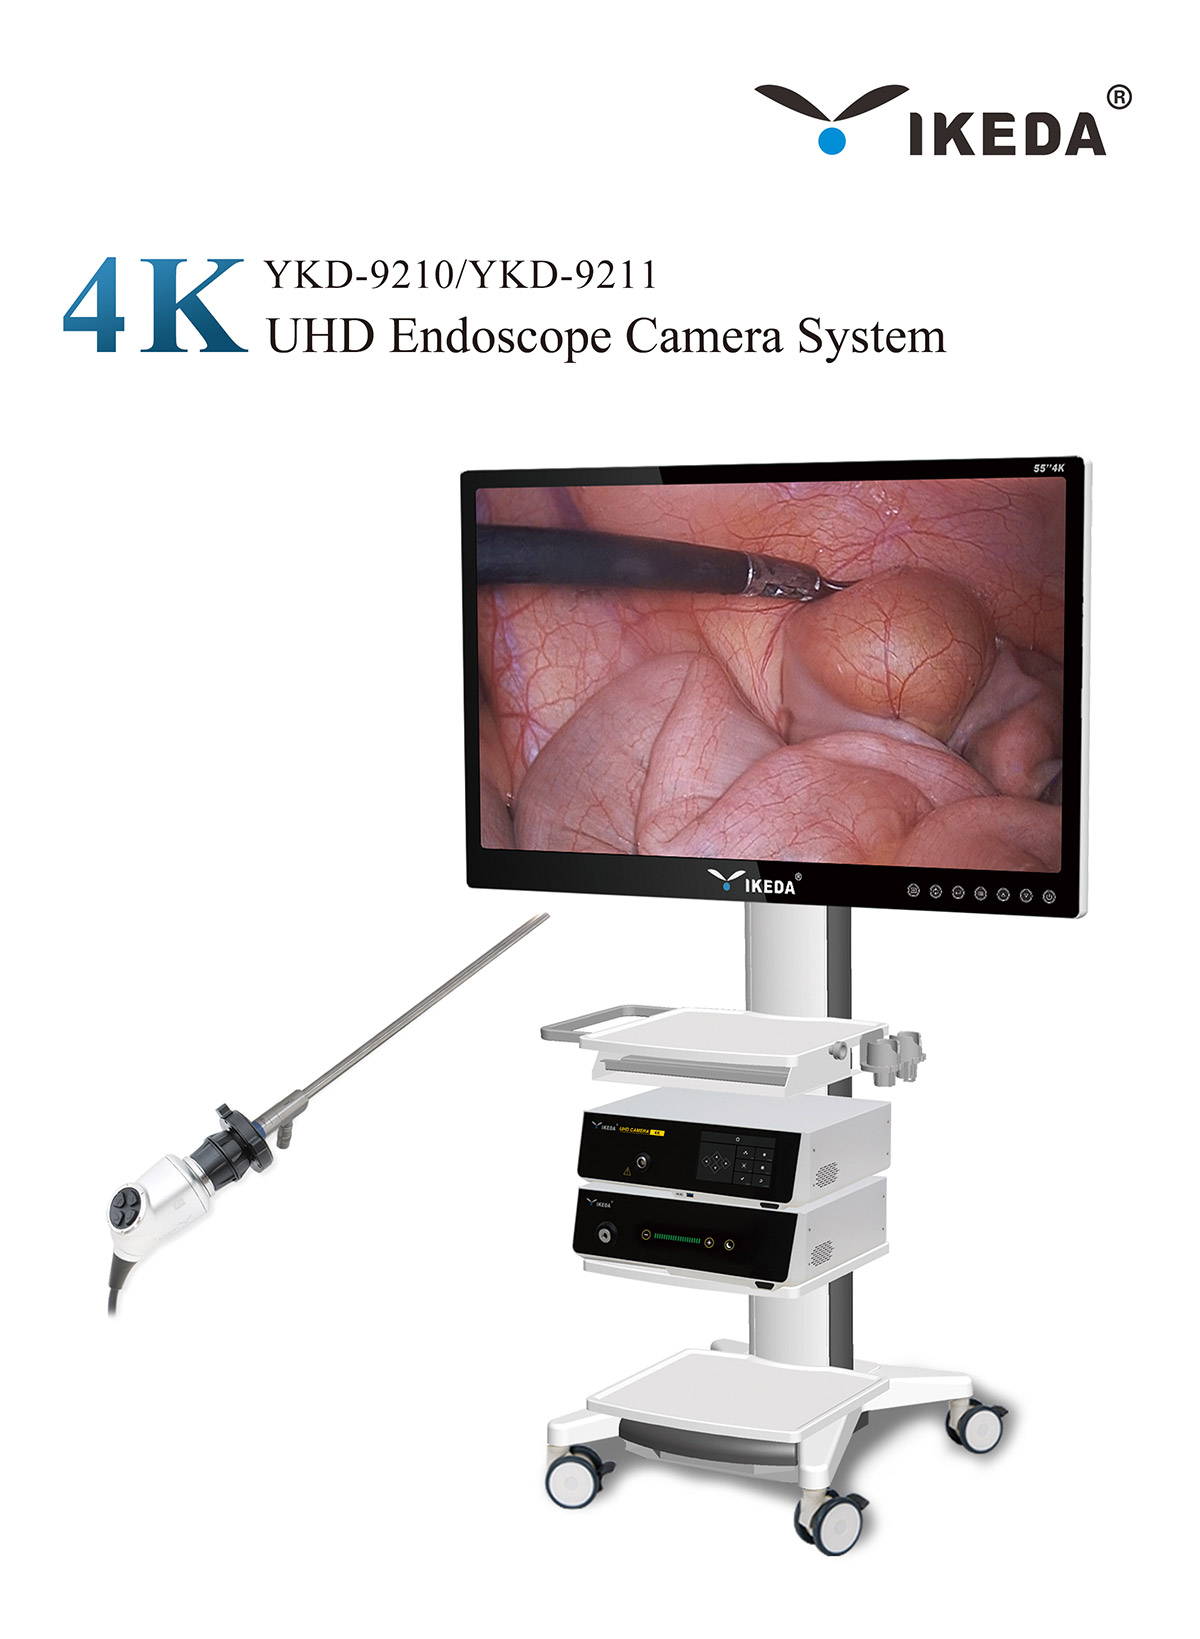 【MADE IN IKEDA】4K Medical Endoscope Camera System